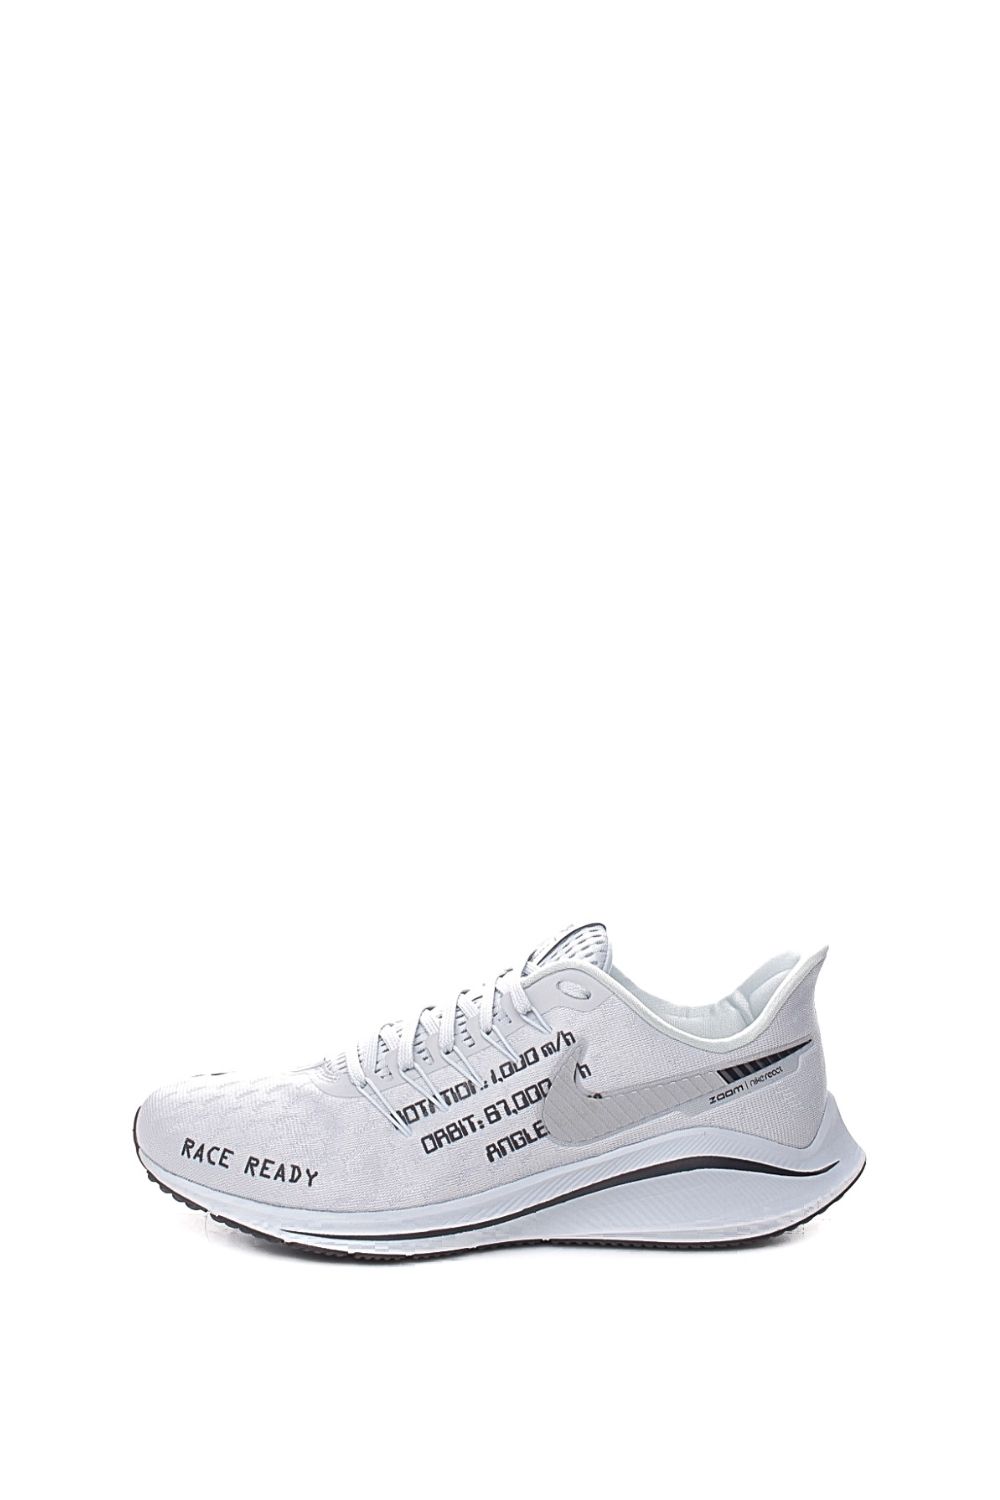 NIKE - Ανδρικά παπούτσια running NIKE AIR ZOOM VOMERO 14 λευκά Ανδρικά/Παπούτσια/Αθλητικά/Running